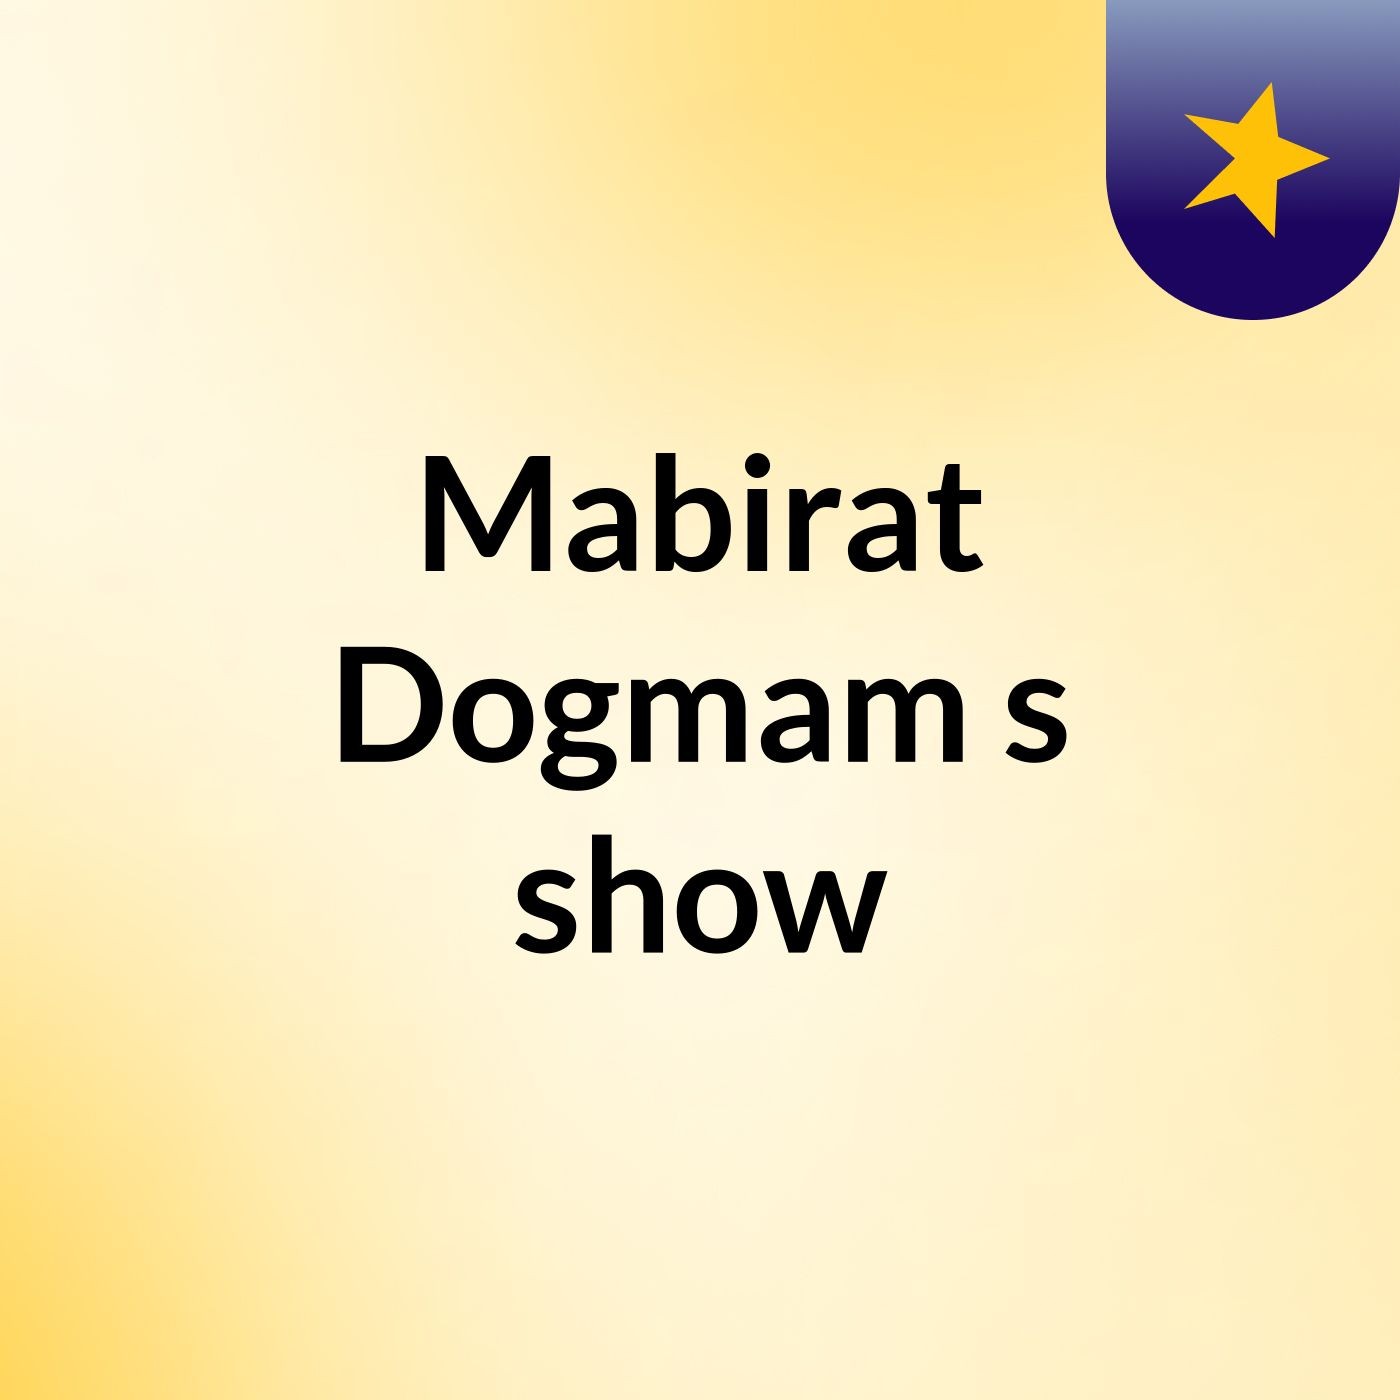 Mabirat Dogmam's show